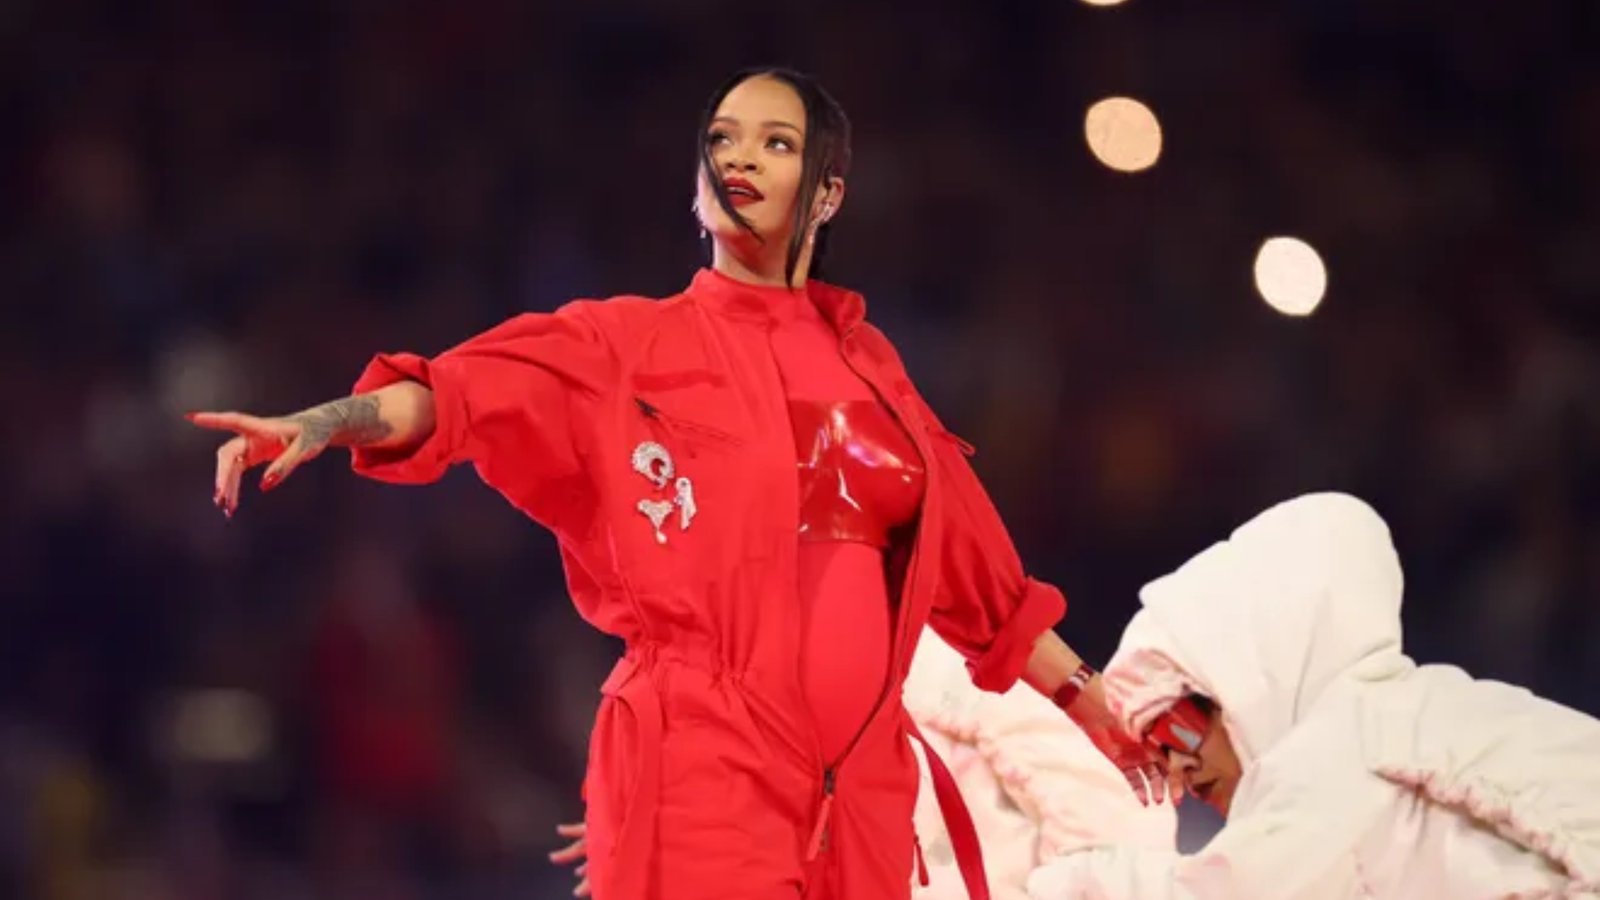 Rihanna Confirms Pregnancy During Super Bowl Halftime Show